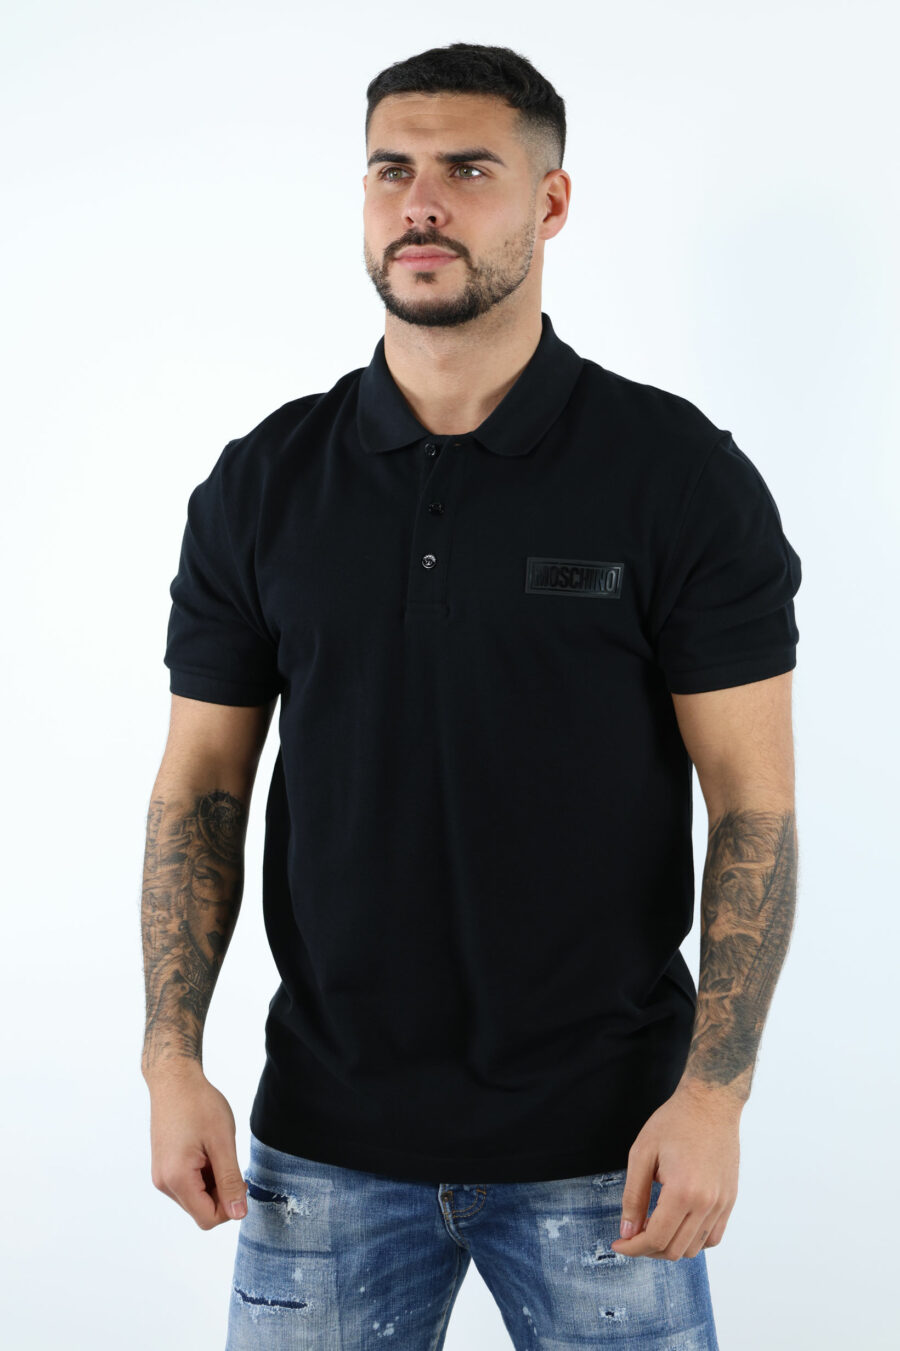 T-shirt preta com etiqueta branca minilogue - 106965